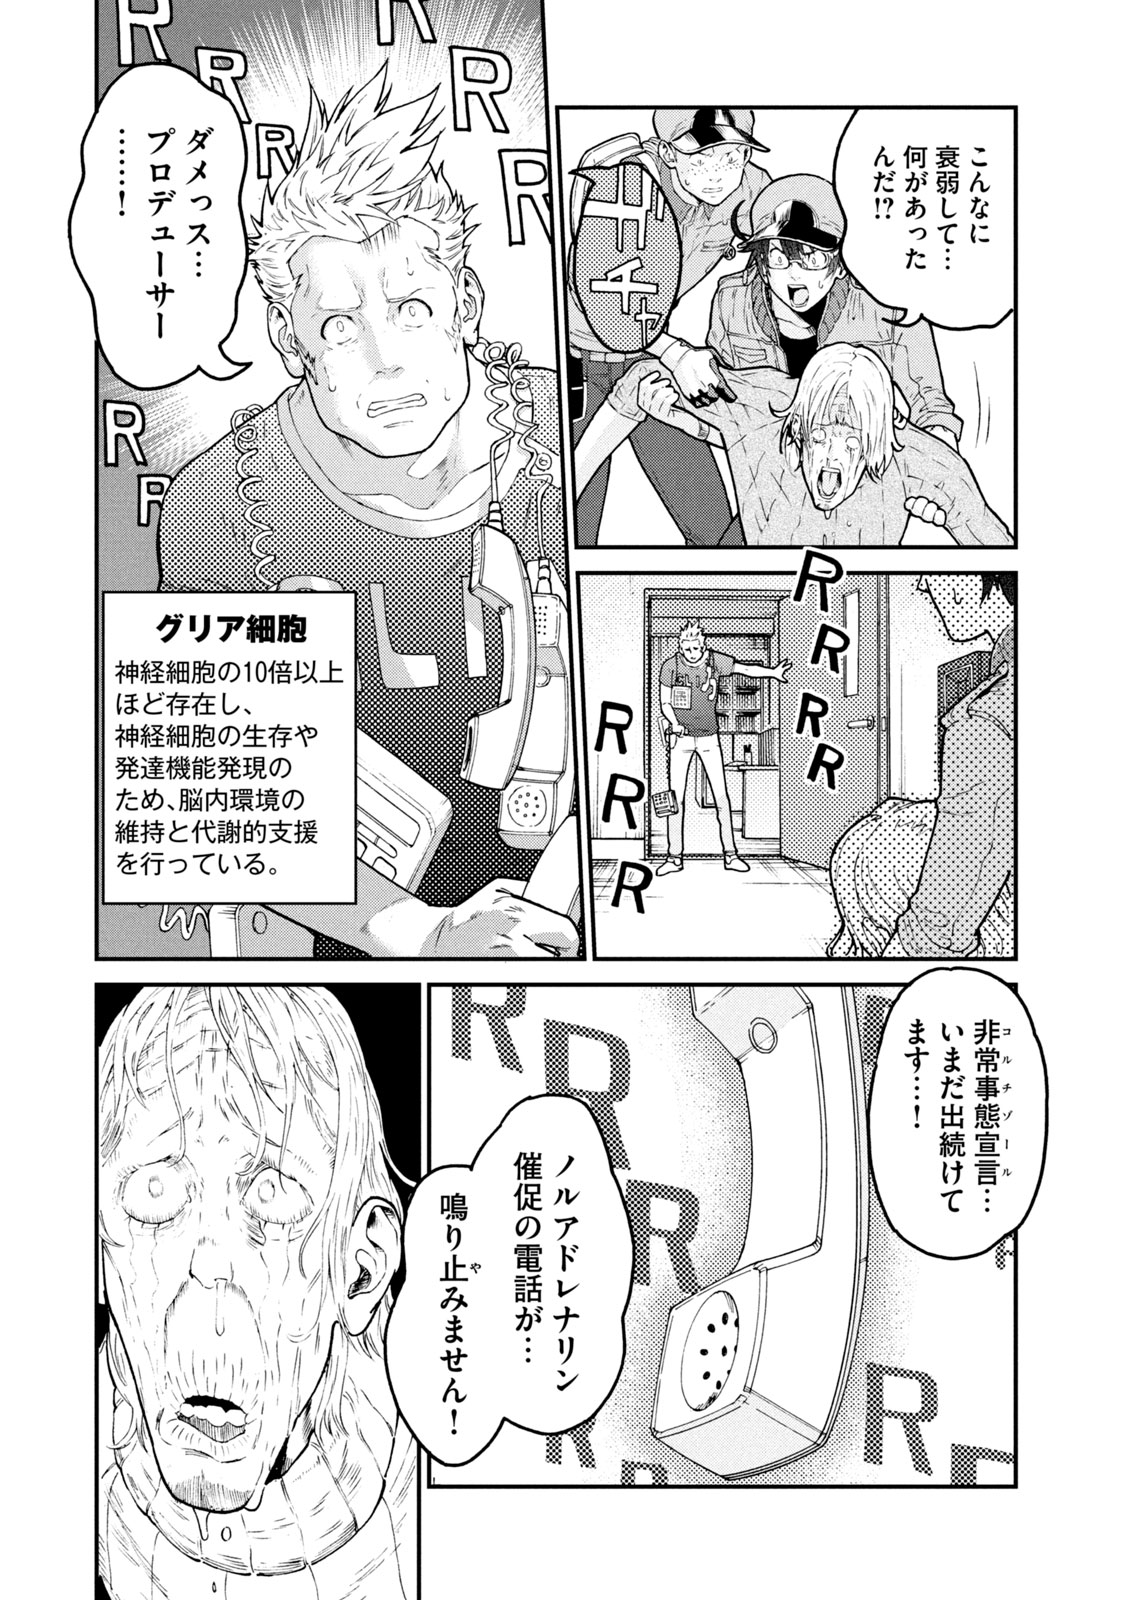 Hataraku Saibou BLACK - Chapter 34 - Page 9